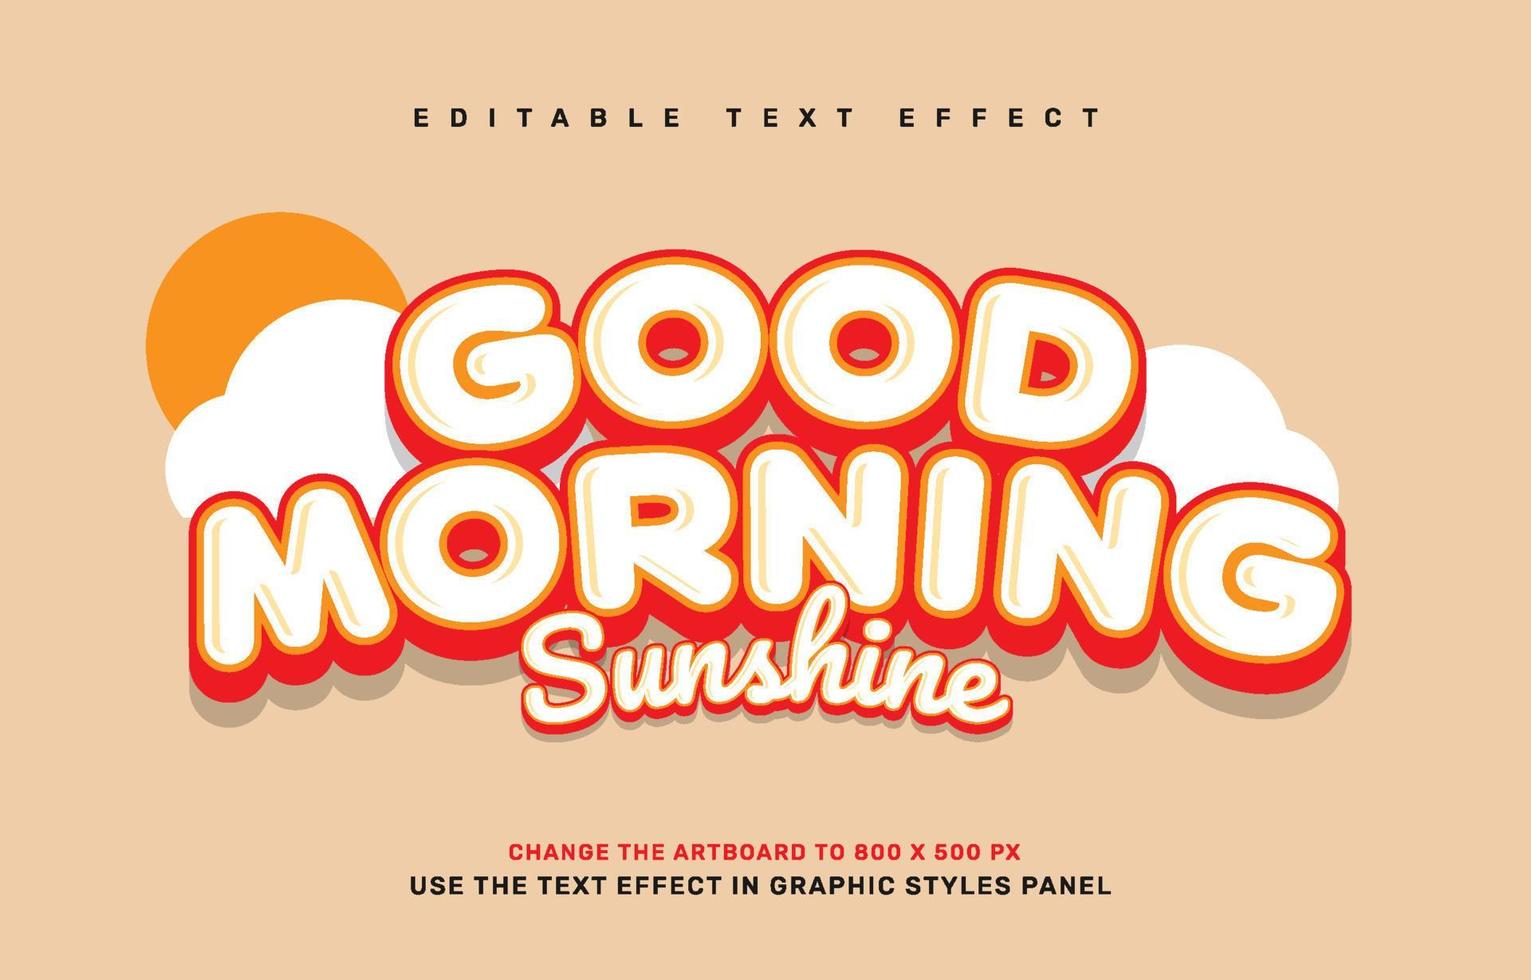 Good morning editable text effect template vector